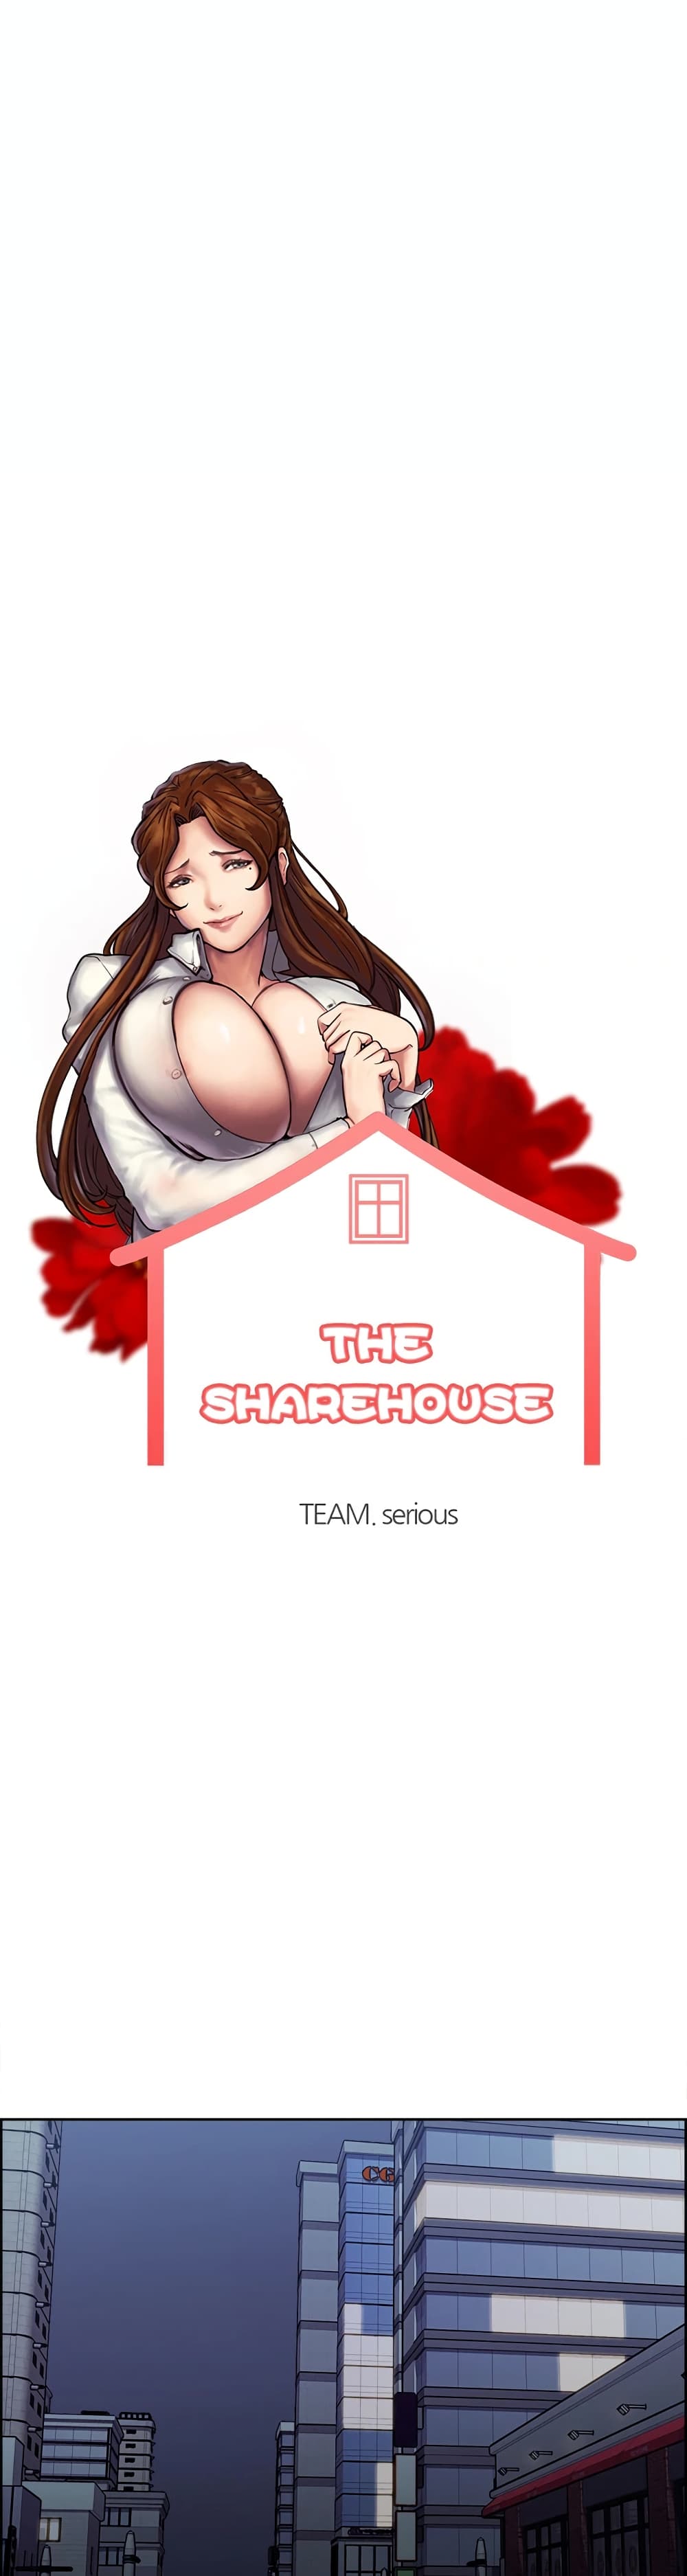 The Sharehouse 34-34